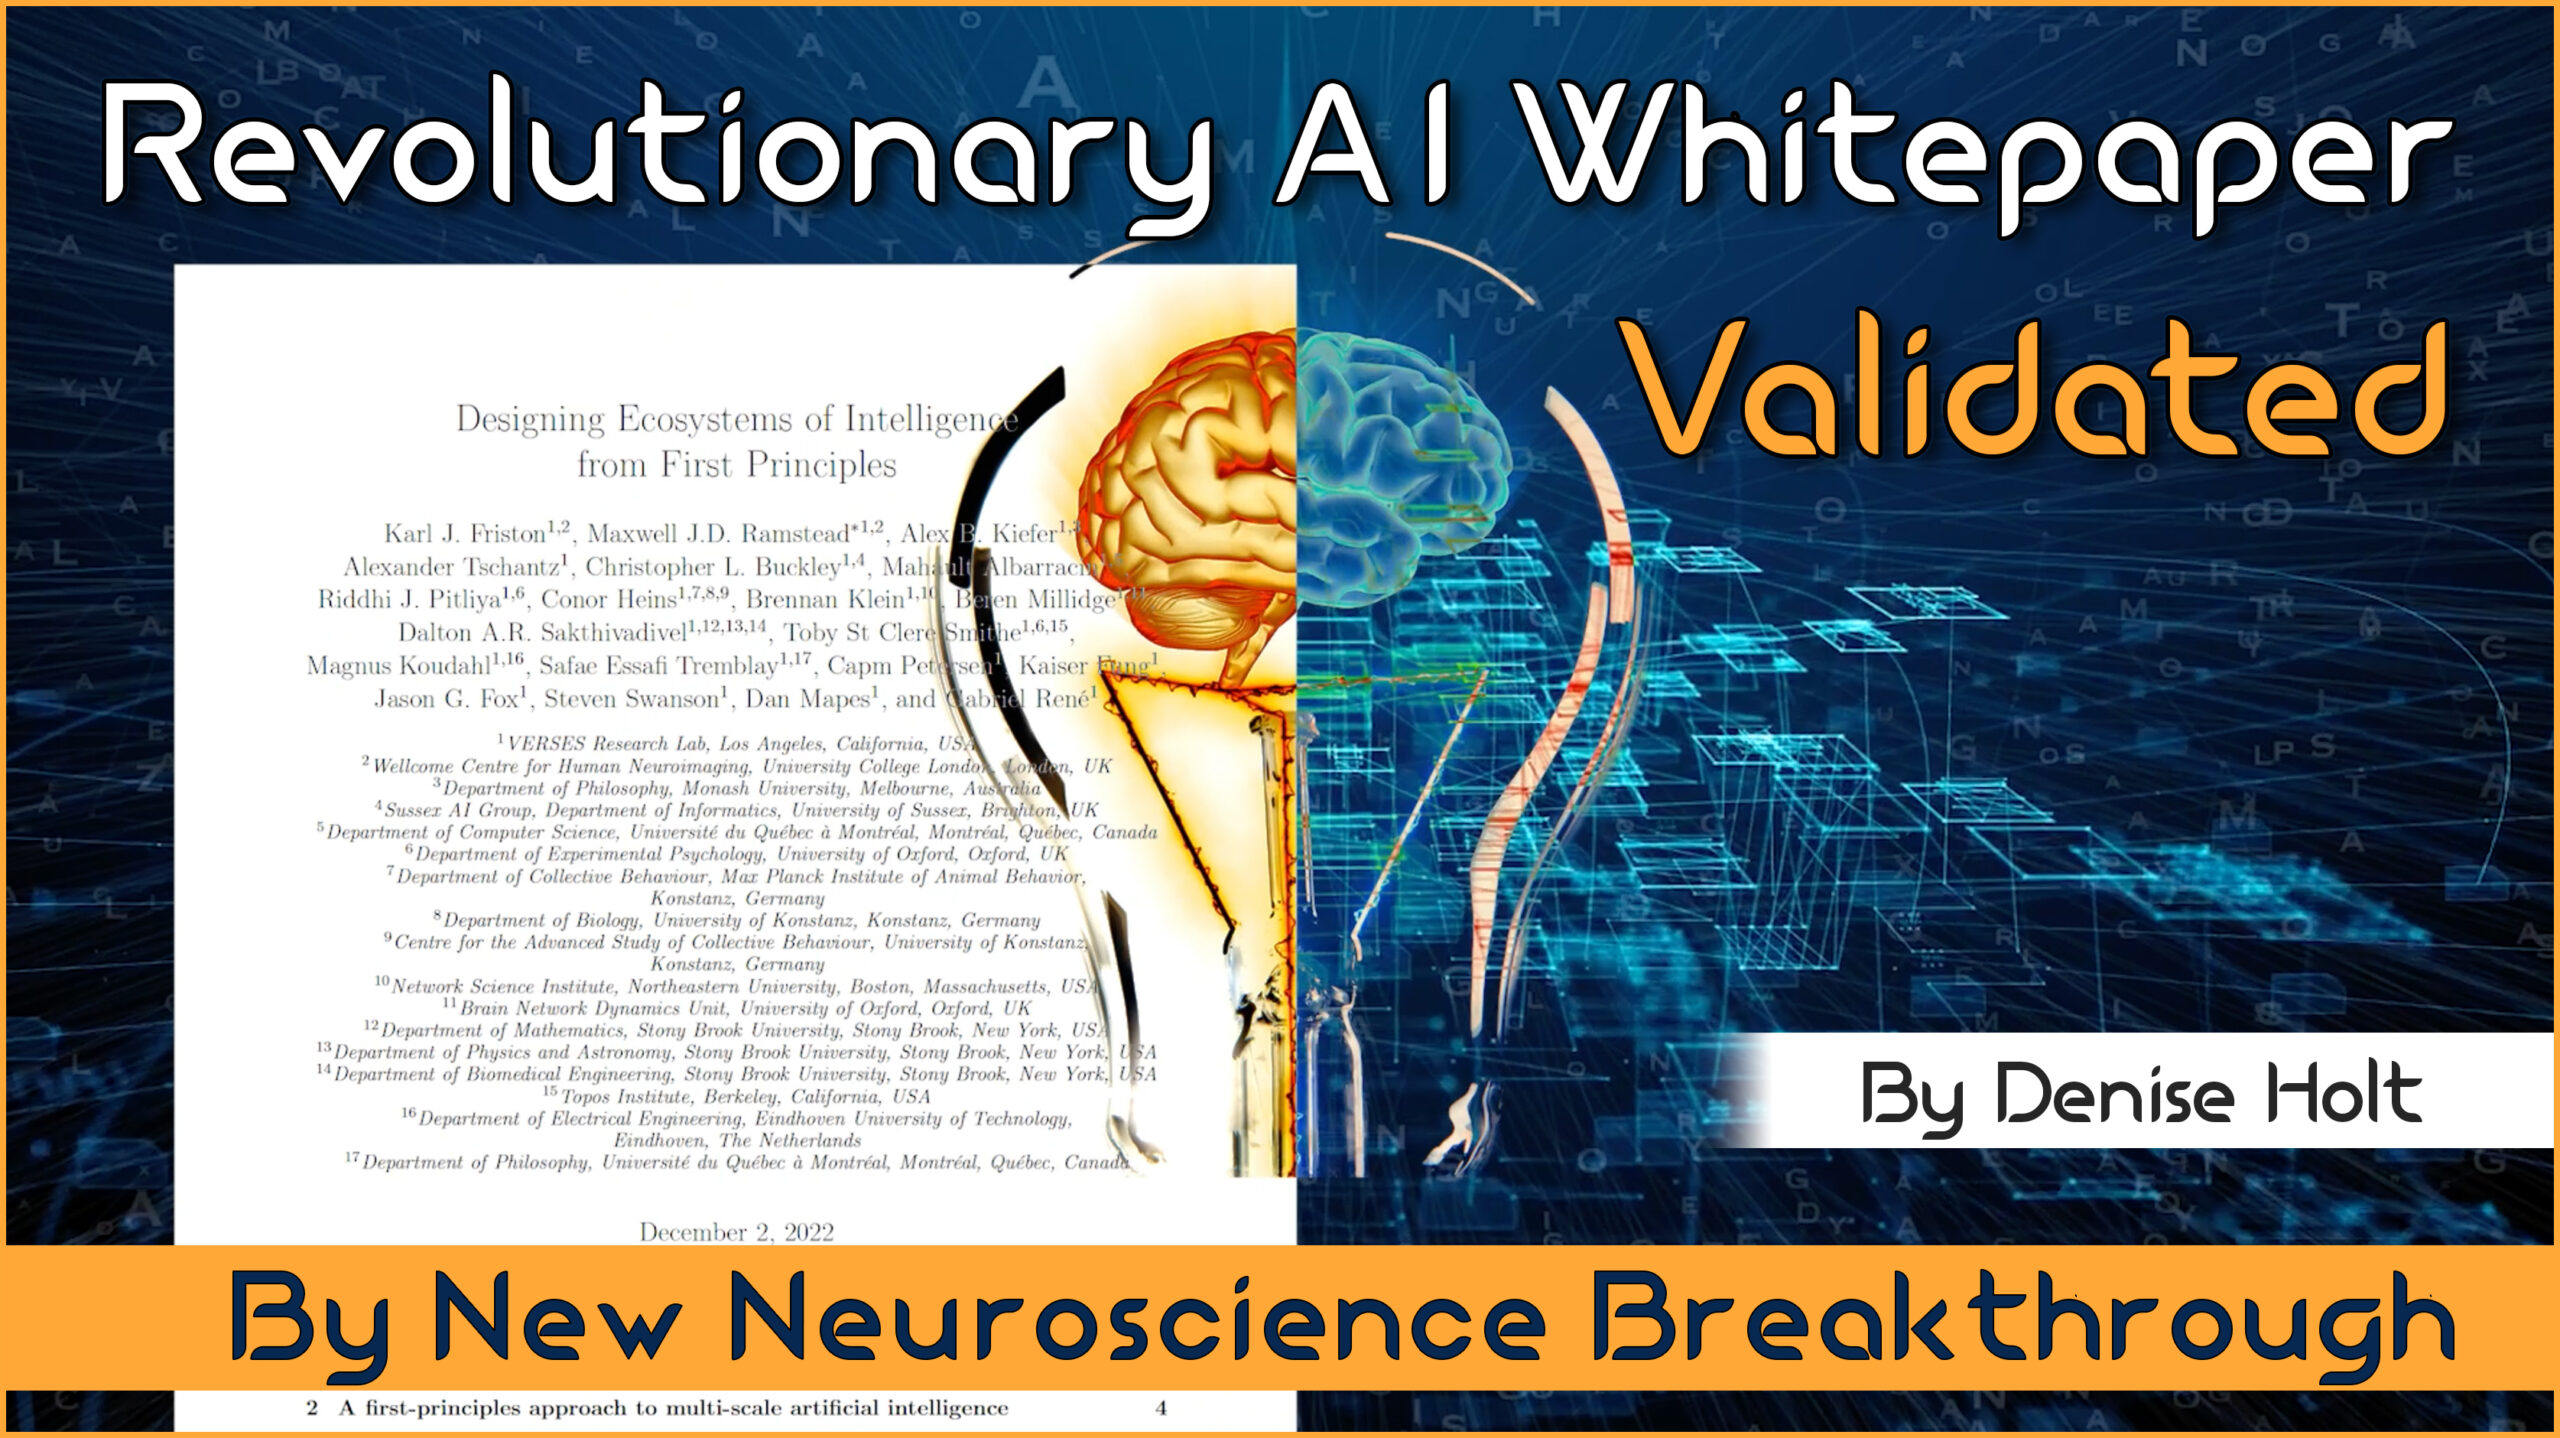 Revolutionary AI Whitepaper Validated by New Neuroscience Breakthrough